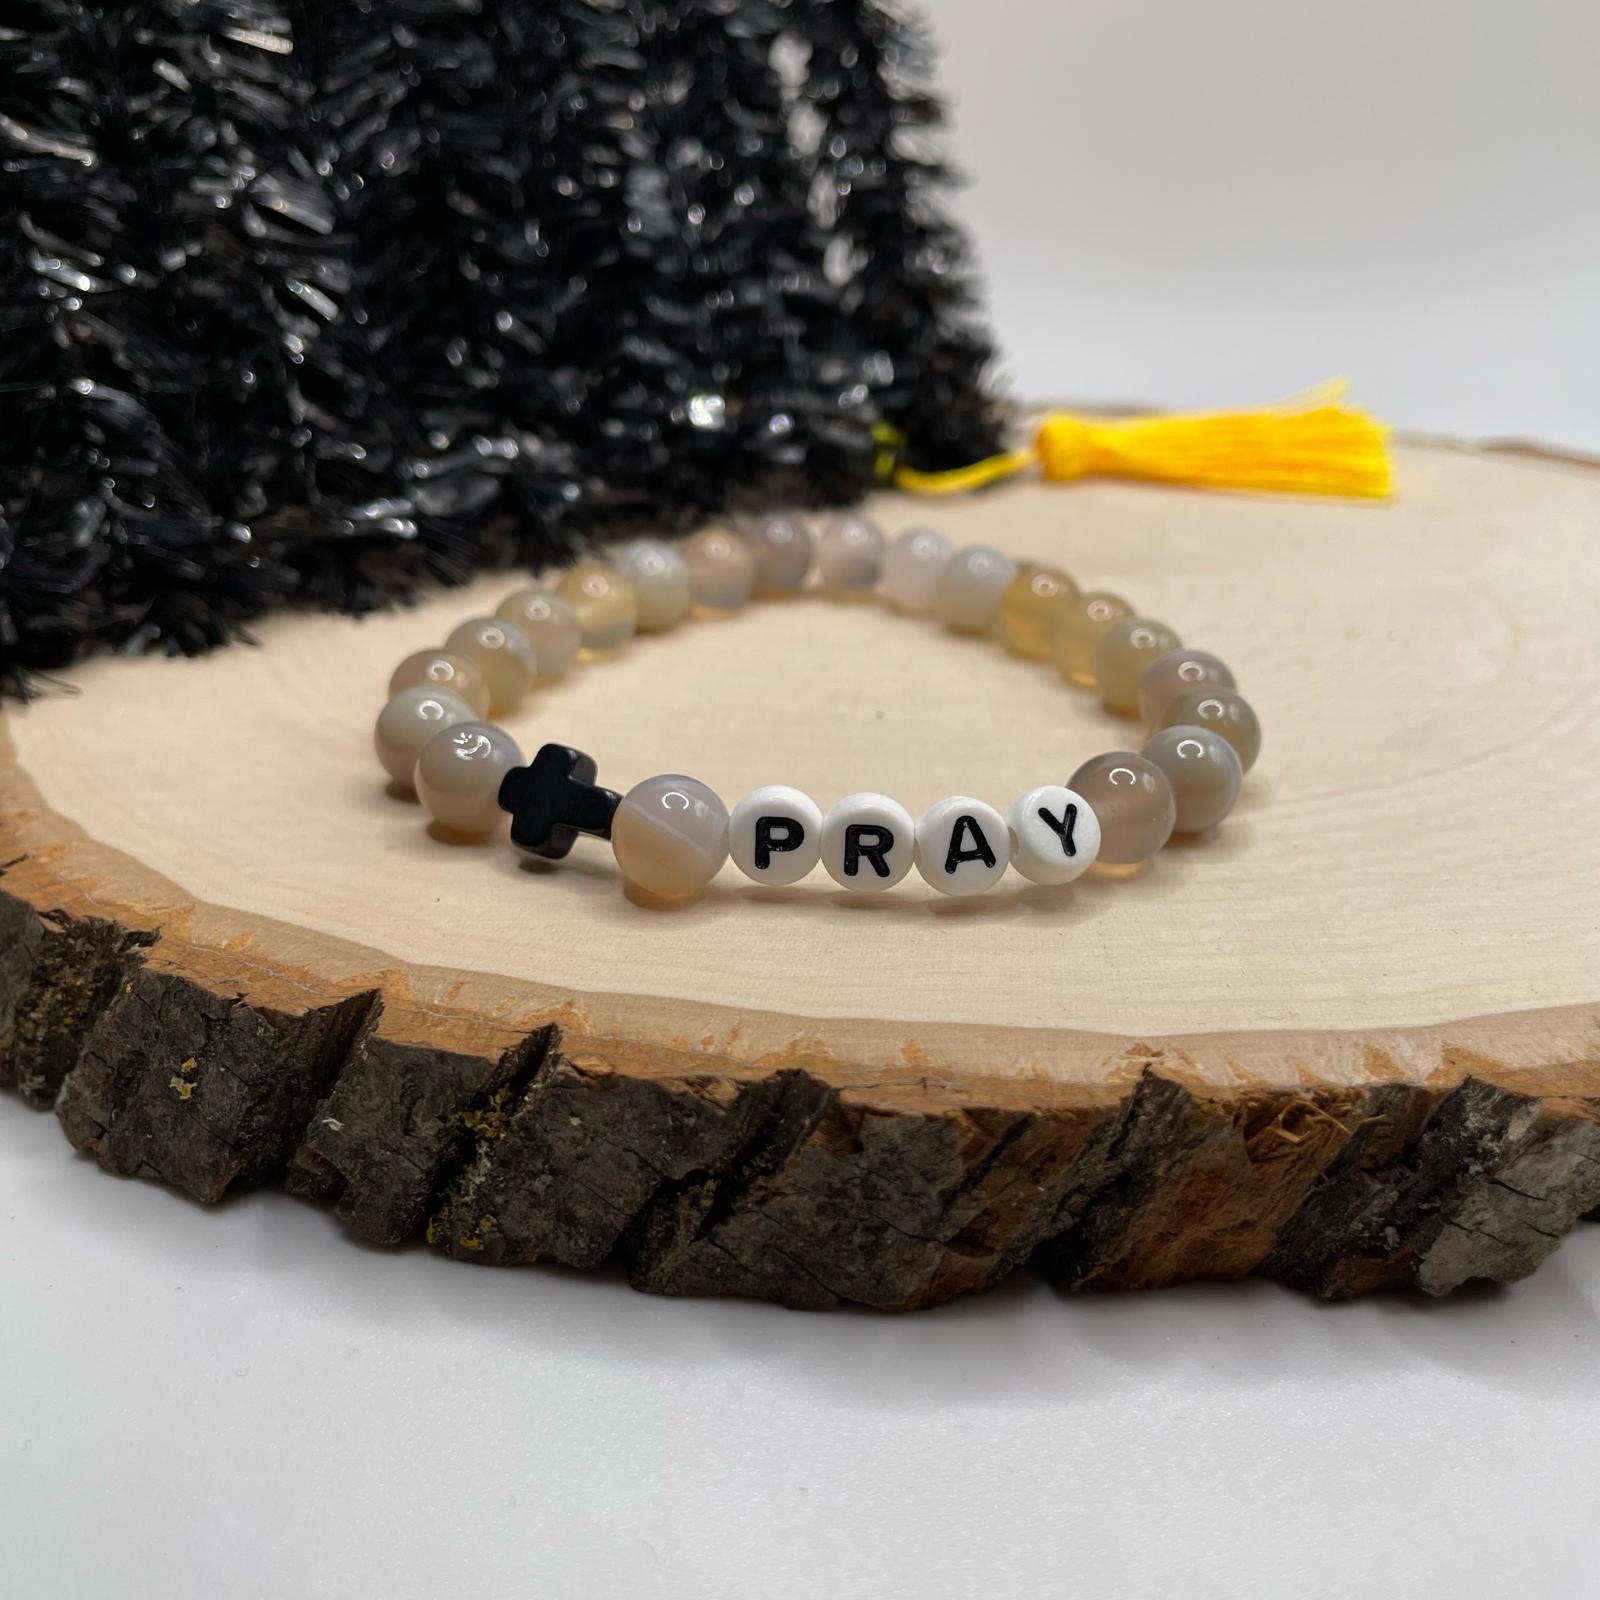 Pray bracelet